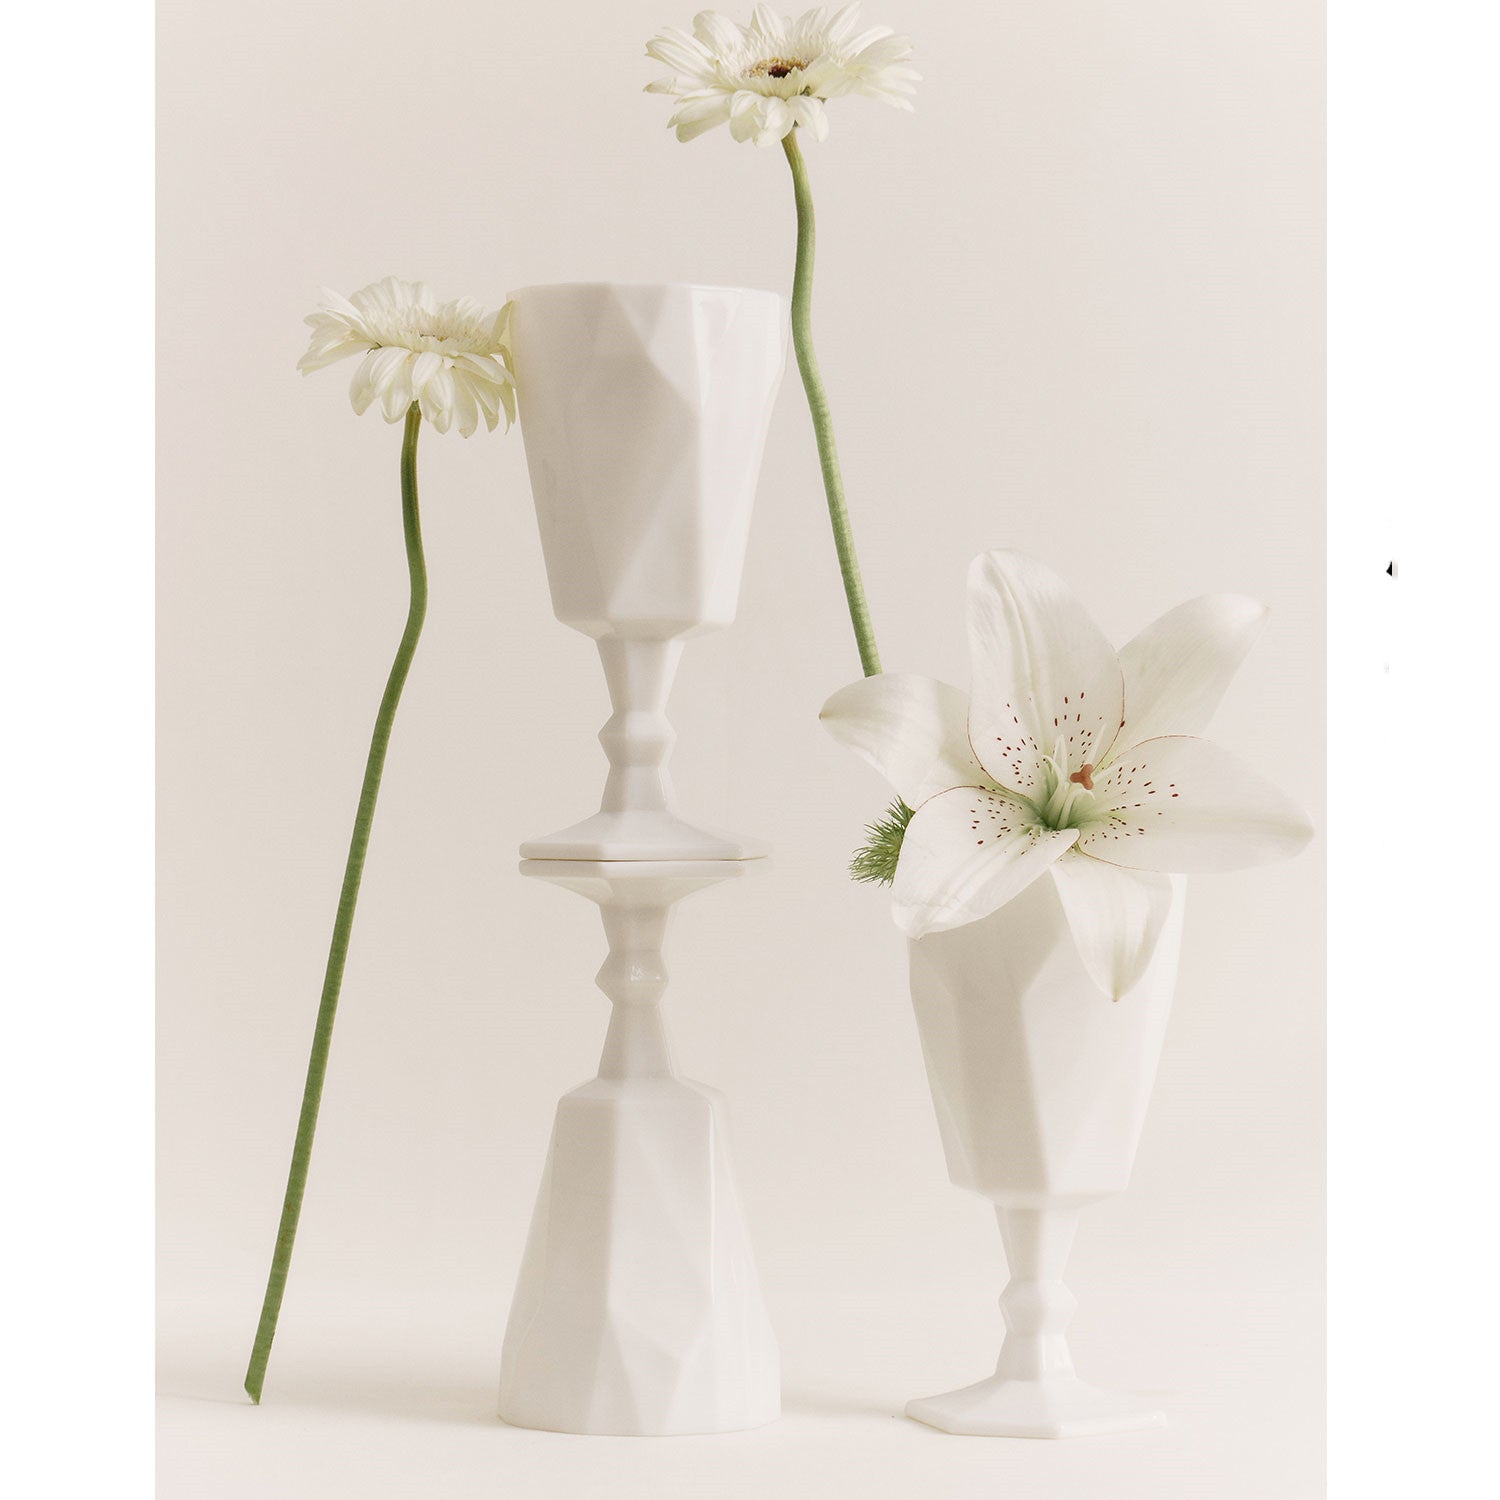 Elegance Reimagined: The White Jade Wine Glass Sculpture"